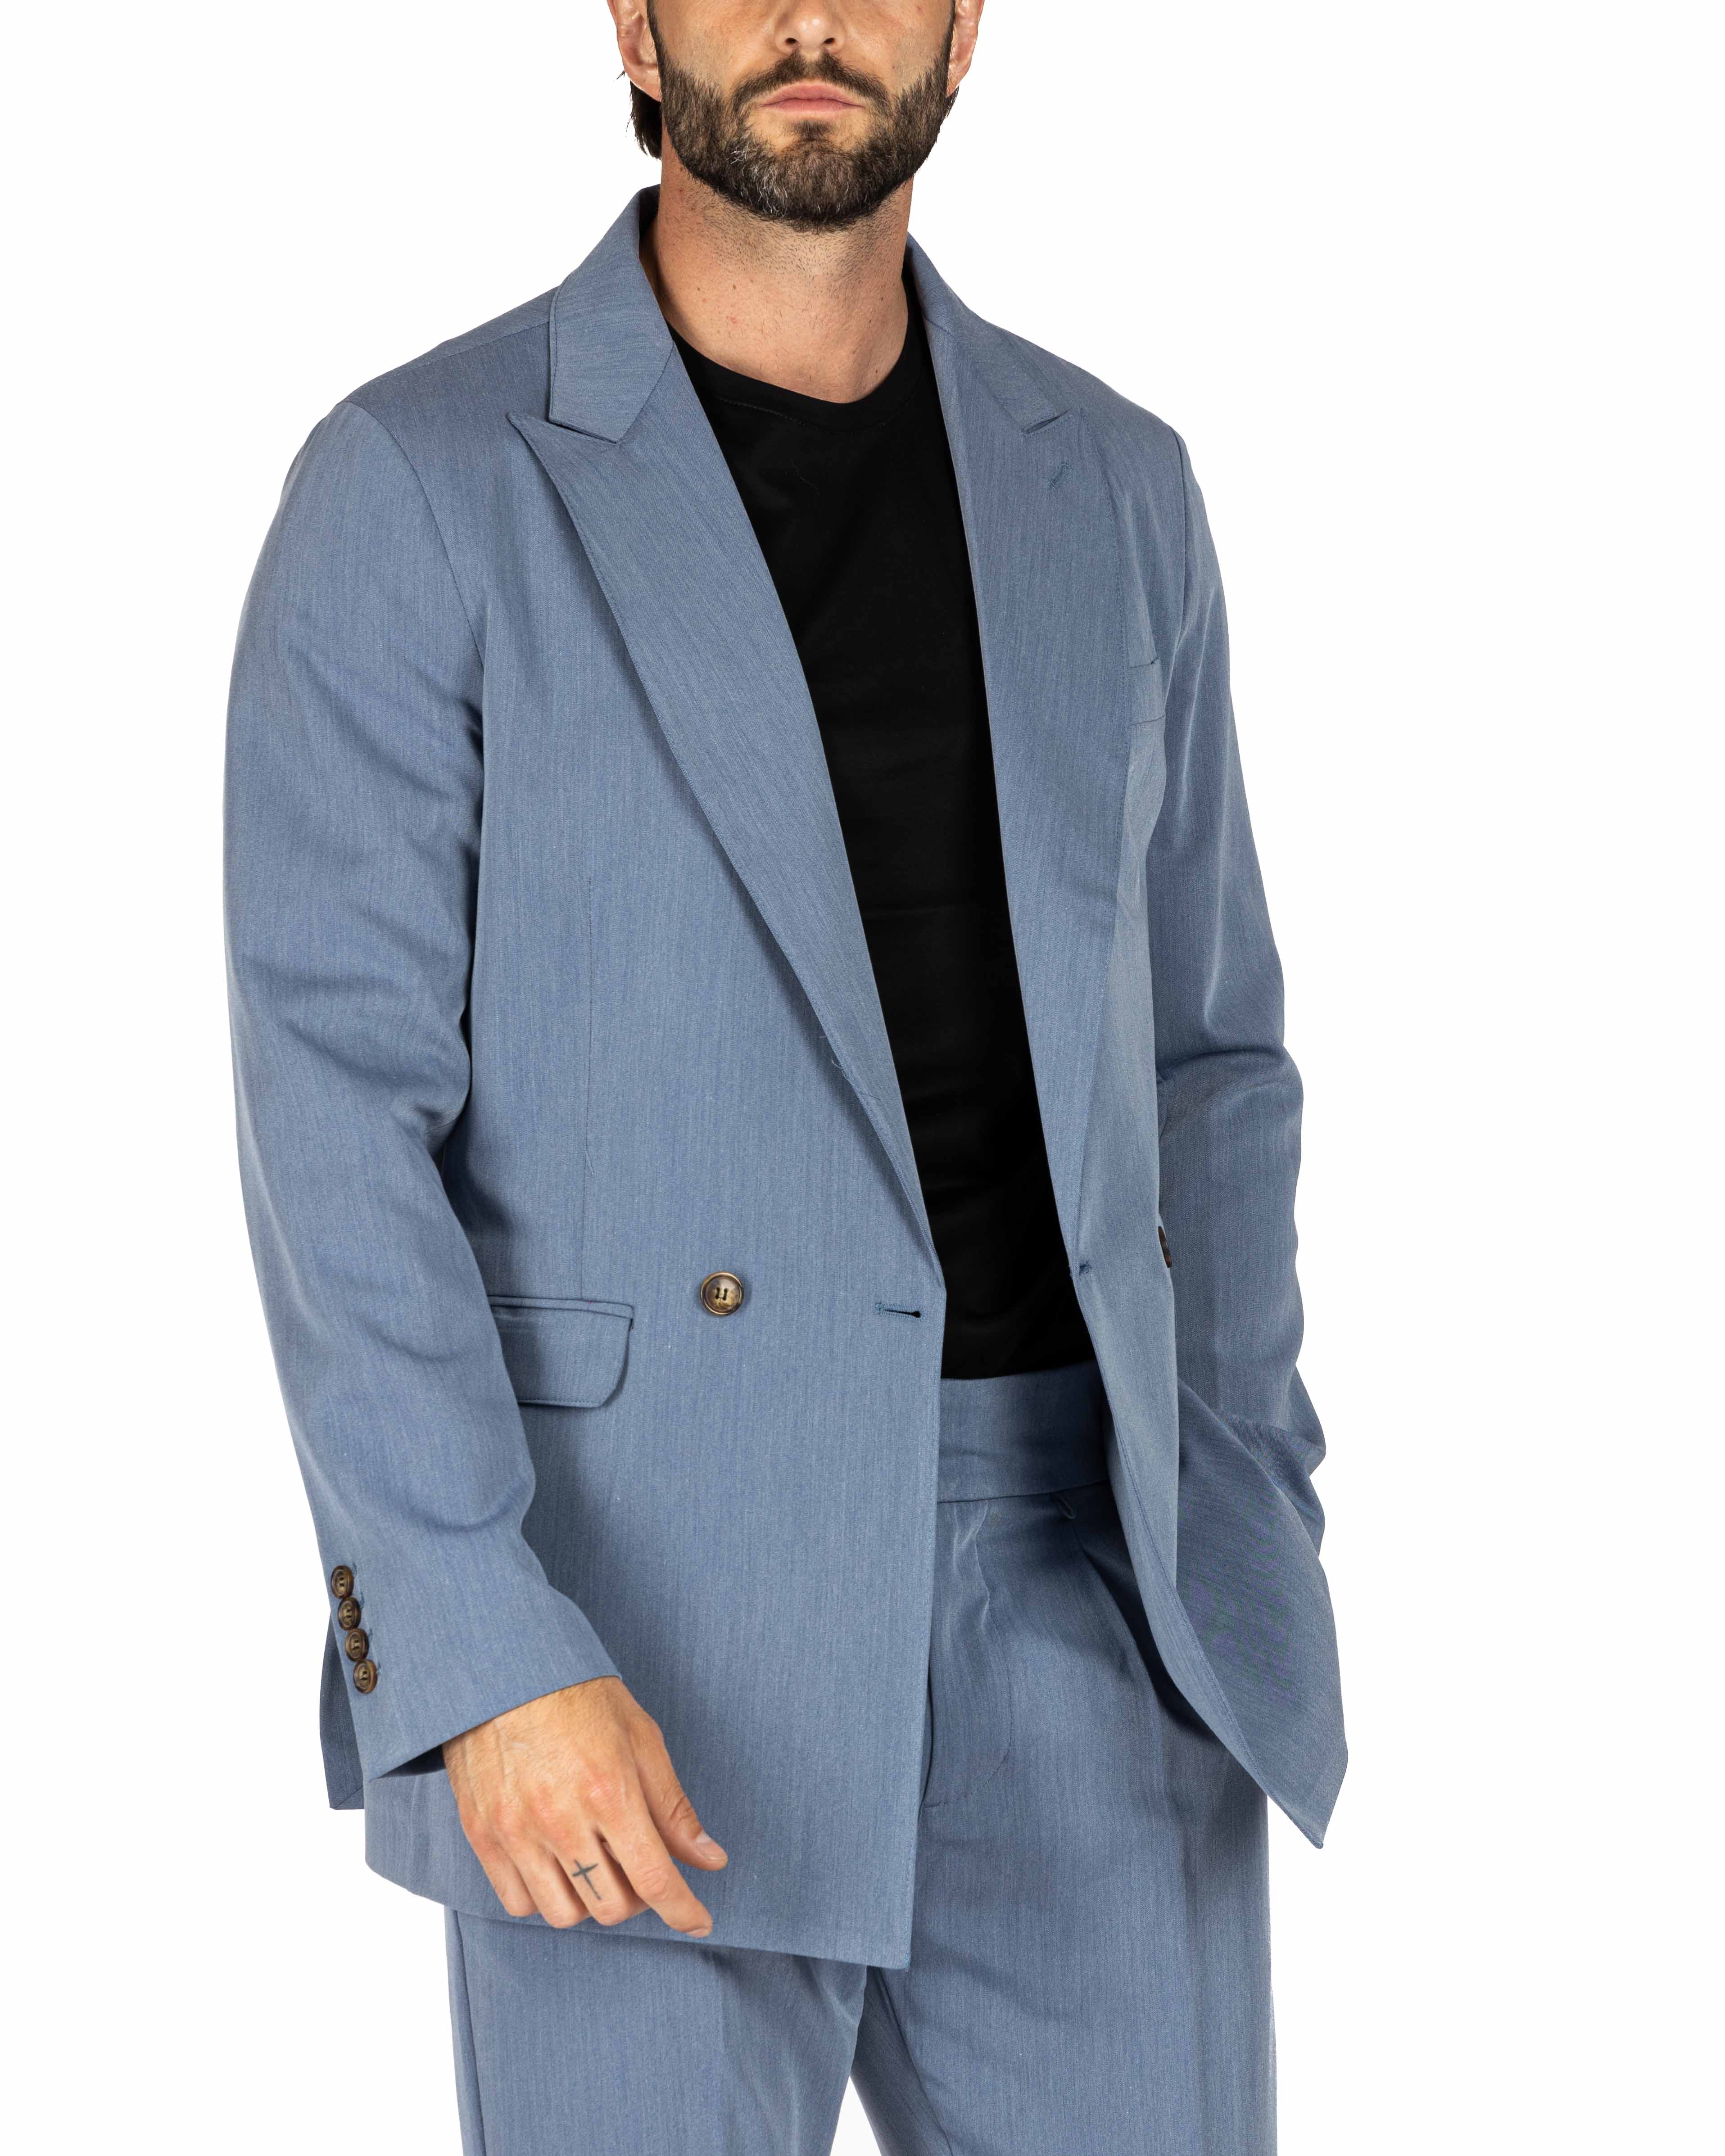 Italian 2.0 - light blue double-breasted jacket